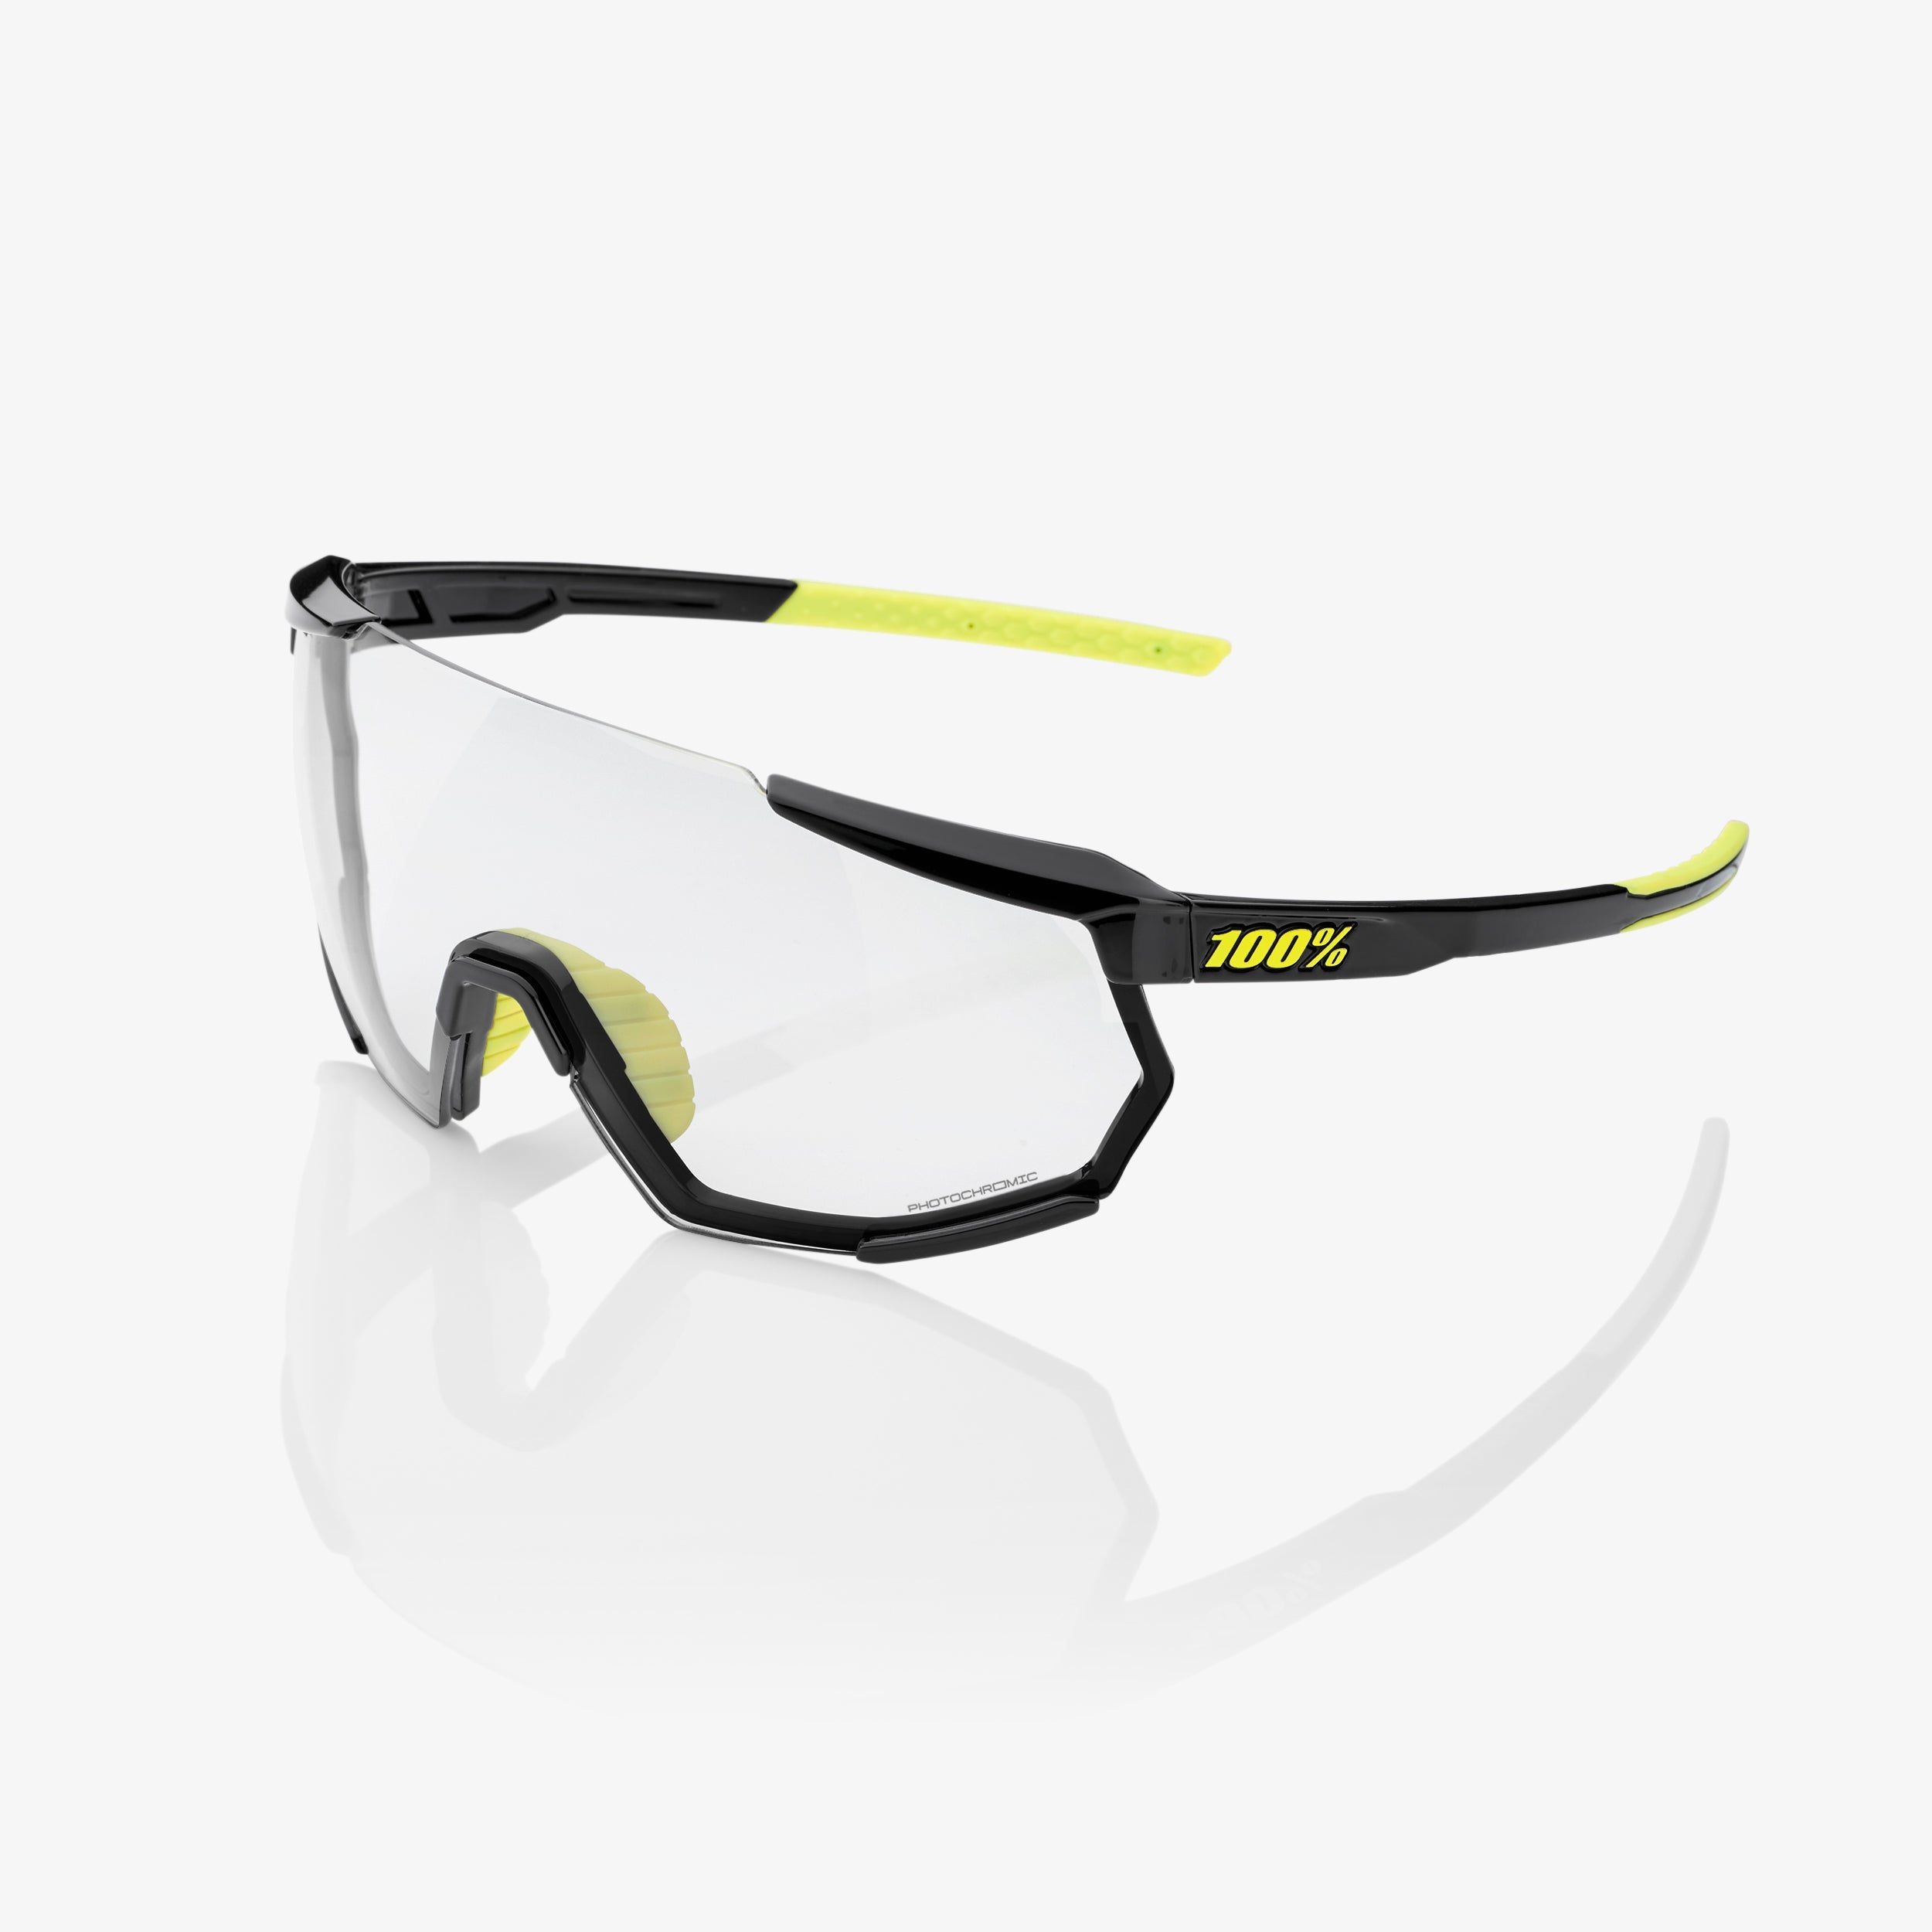 Racetrap Sports Performance Sunglasses – 100% Europe